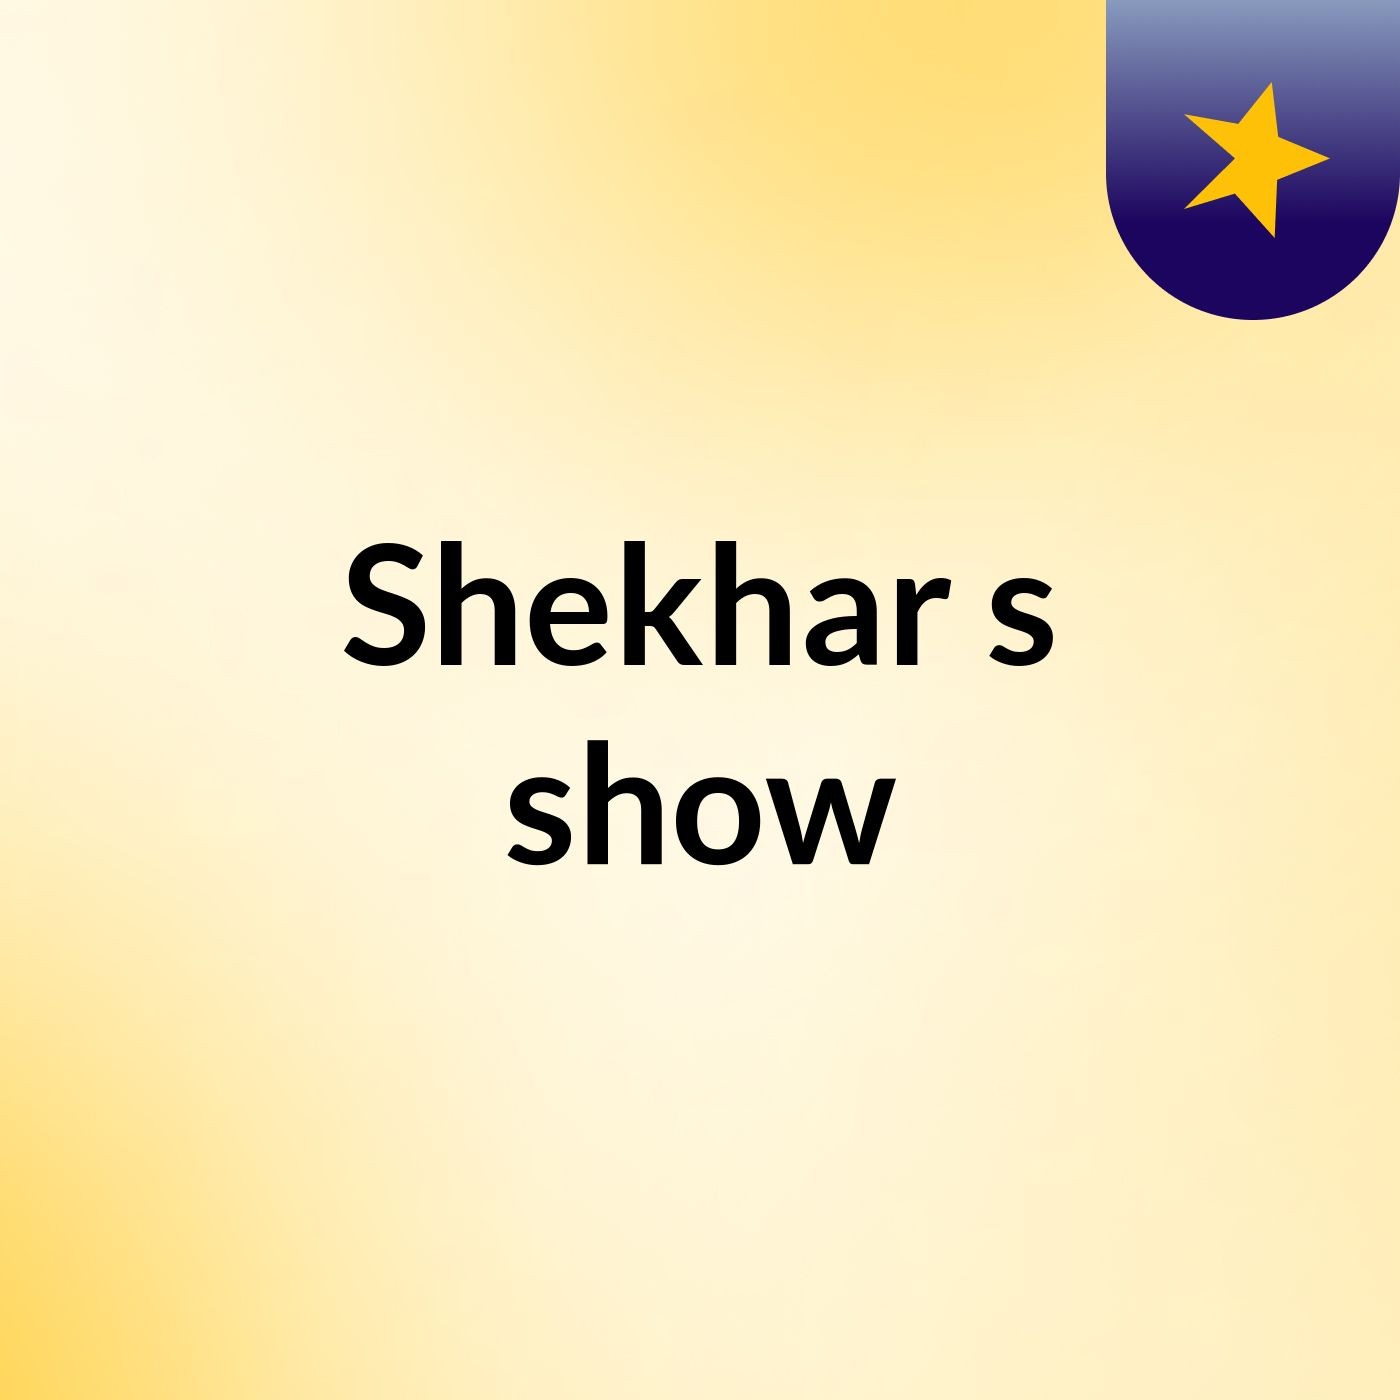 Shekhar's show